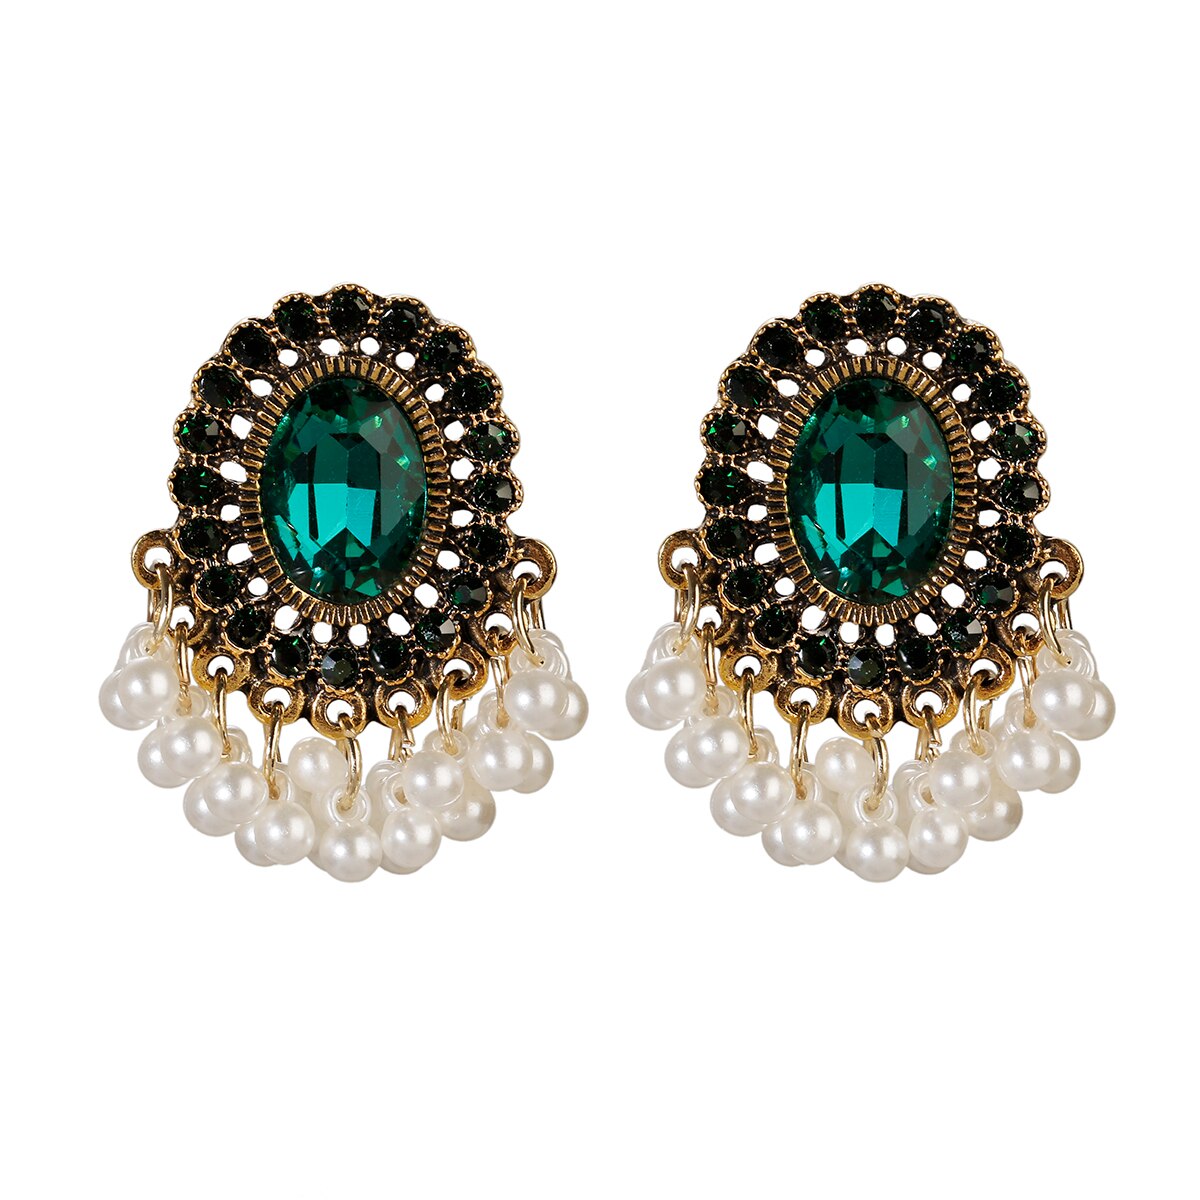 Classic-Blue-Crystal-Indian-Earrings-For-Women-Pendientes-Luxury-Pearl-Tassel-Earrings-Jewelry-Brinc-1005003753178643-3